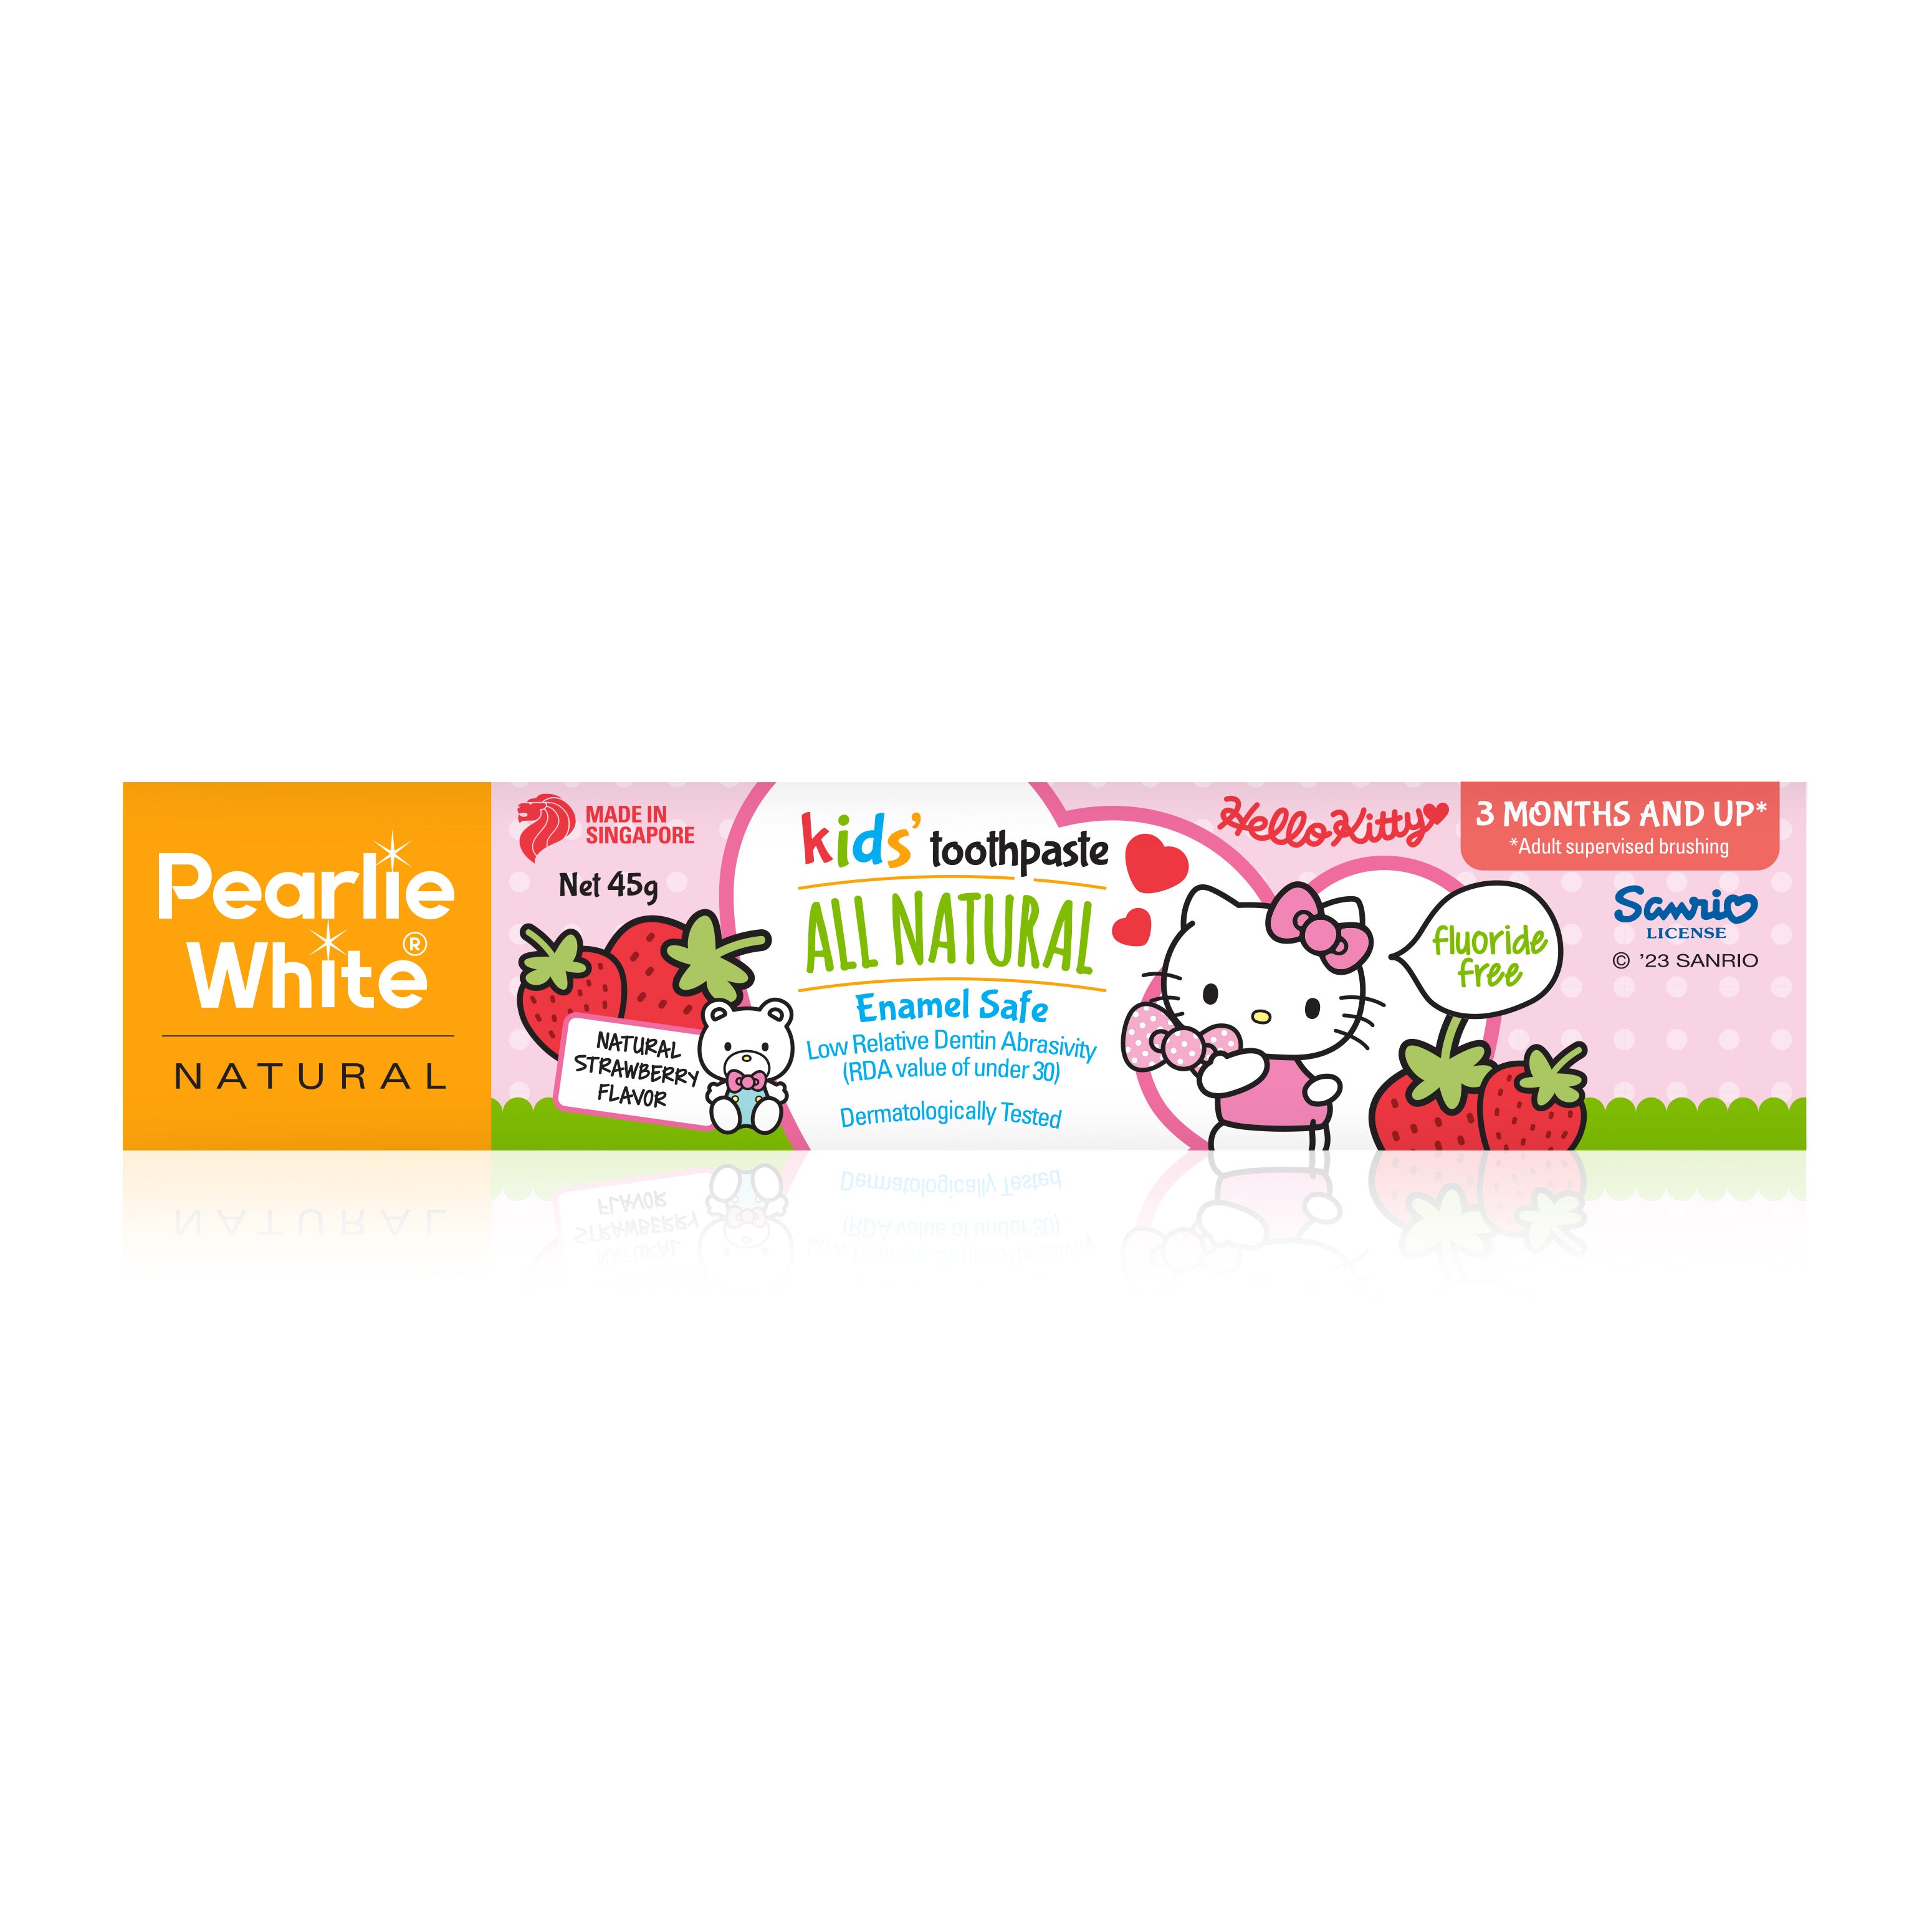 Hello Kitty All Natural Enamel Safe Kids’ Toothpaste (Strawberry) 45g